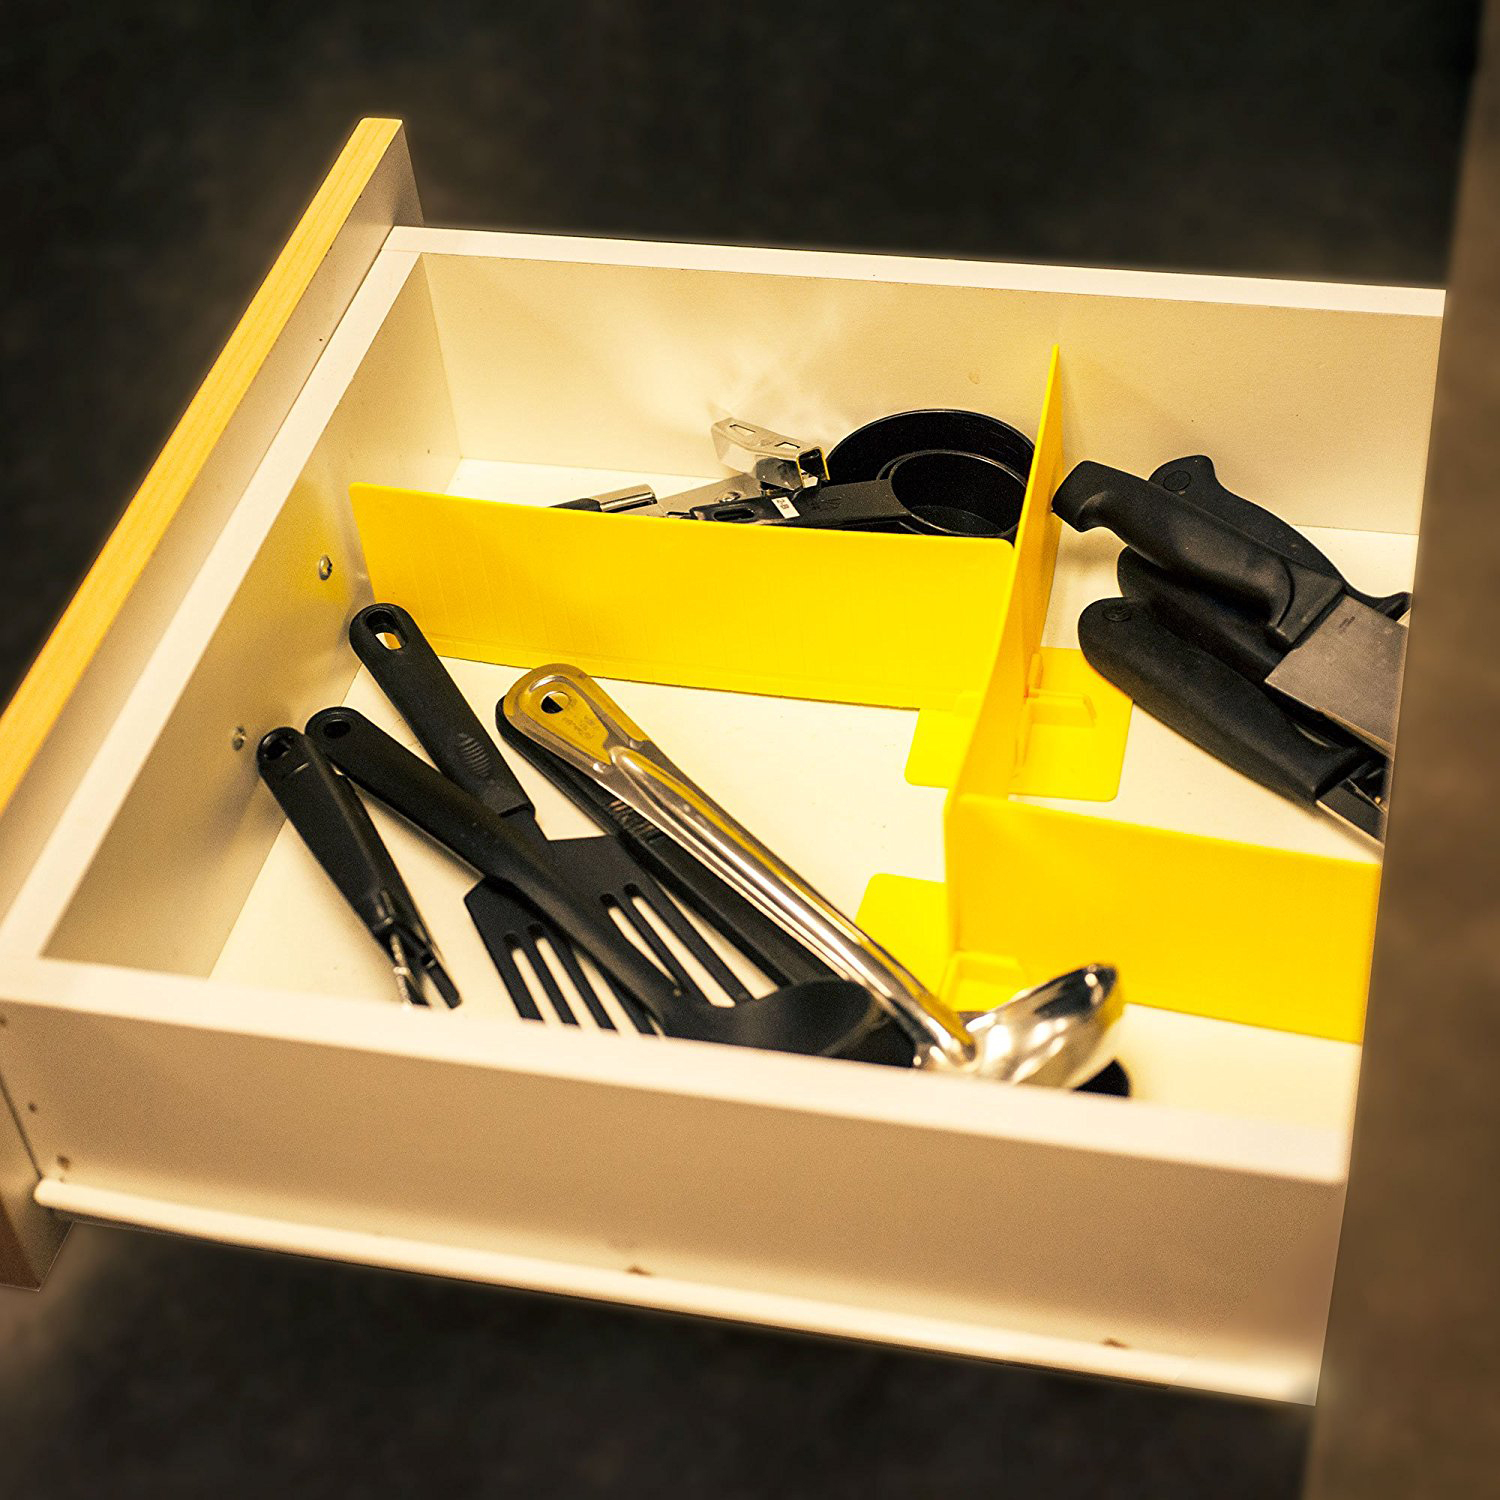 15 piece Kitchen Utility Drawer Organizer Set Kit